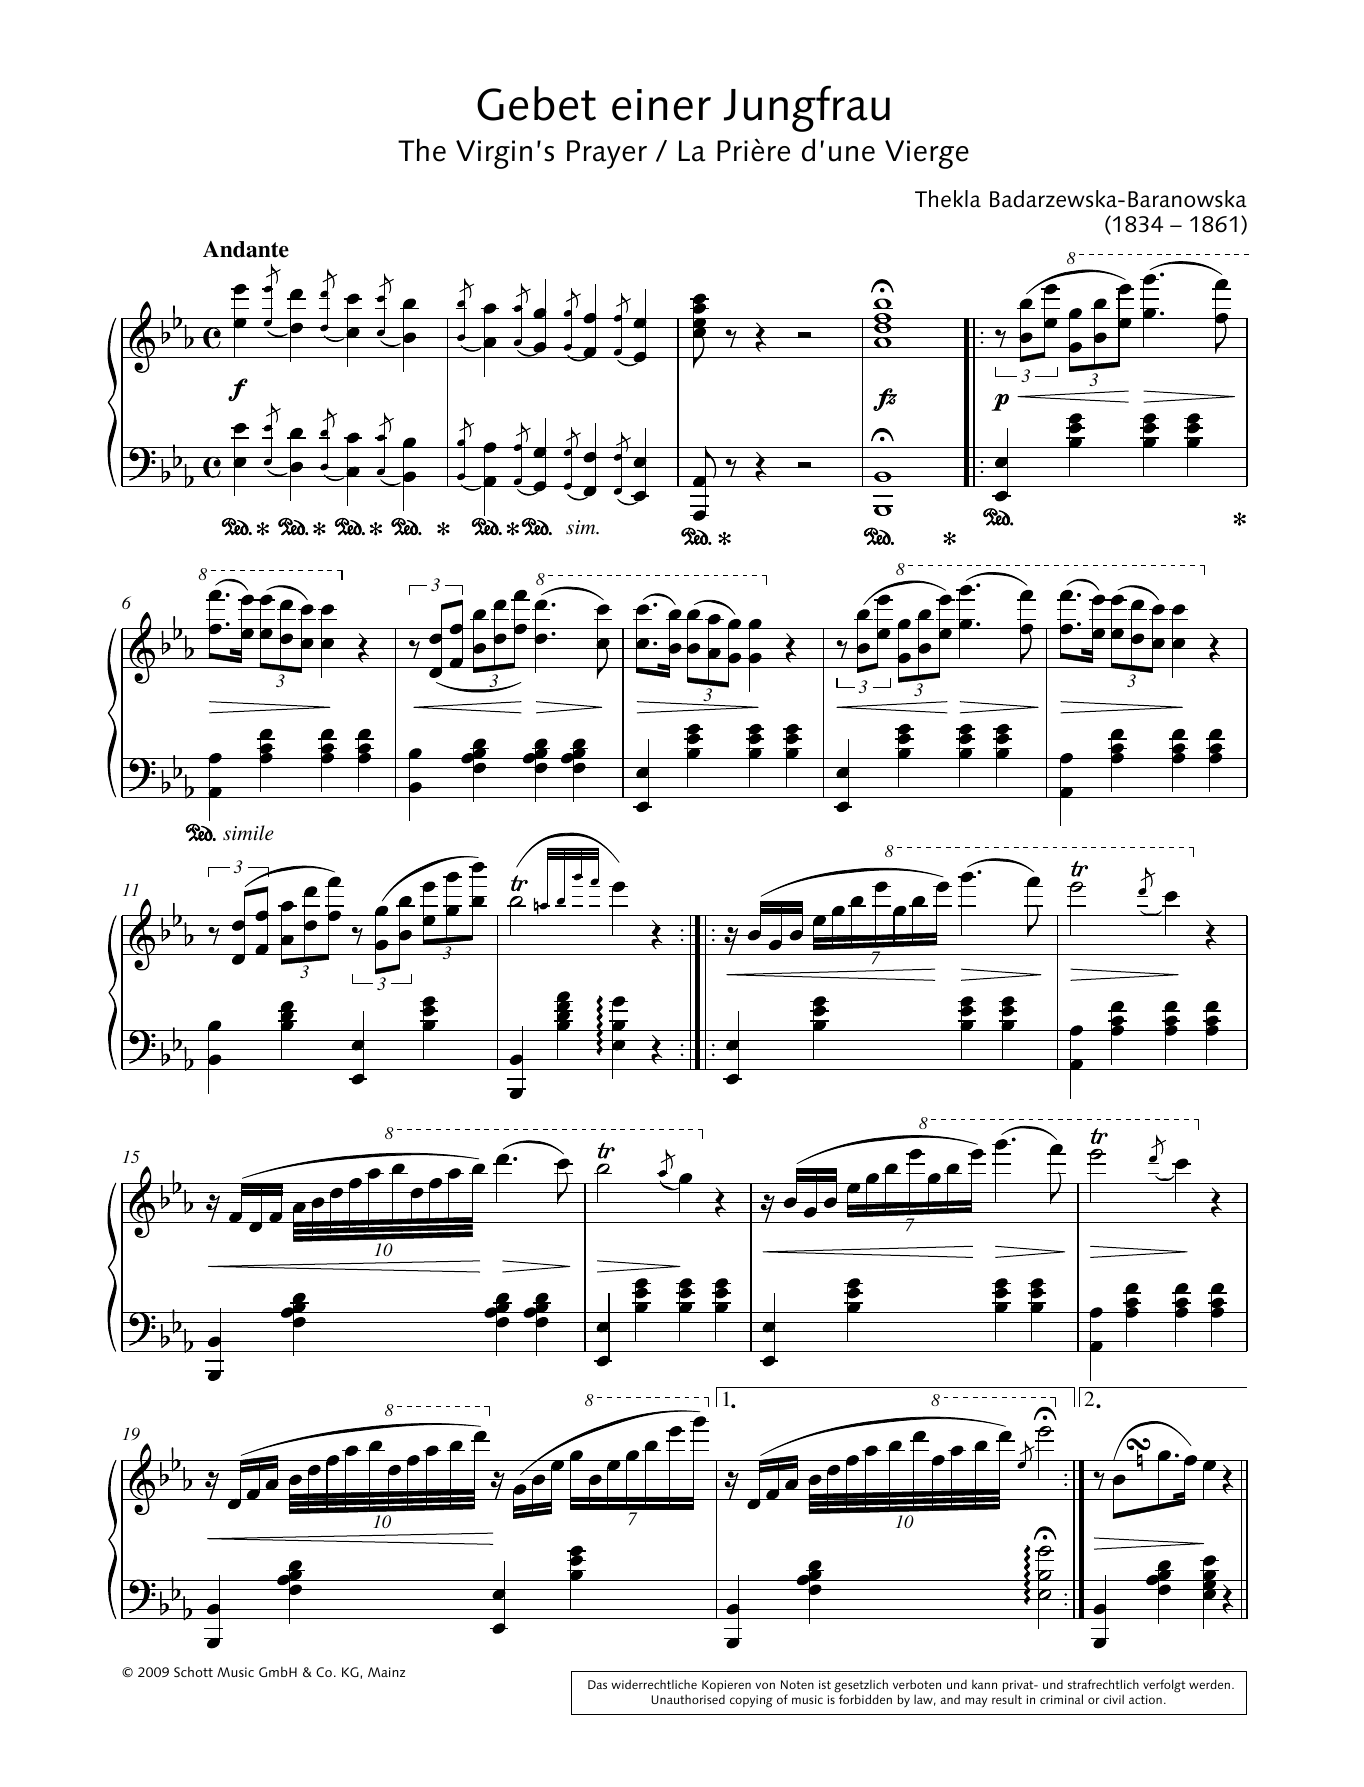 Hans-Gunter Heumann The Virgin's Prayer Sheet Music Notes & Chords for Piano Solo - Download or Print PDF